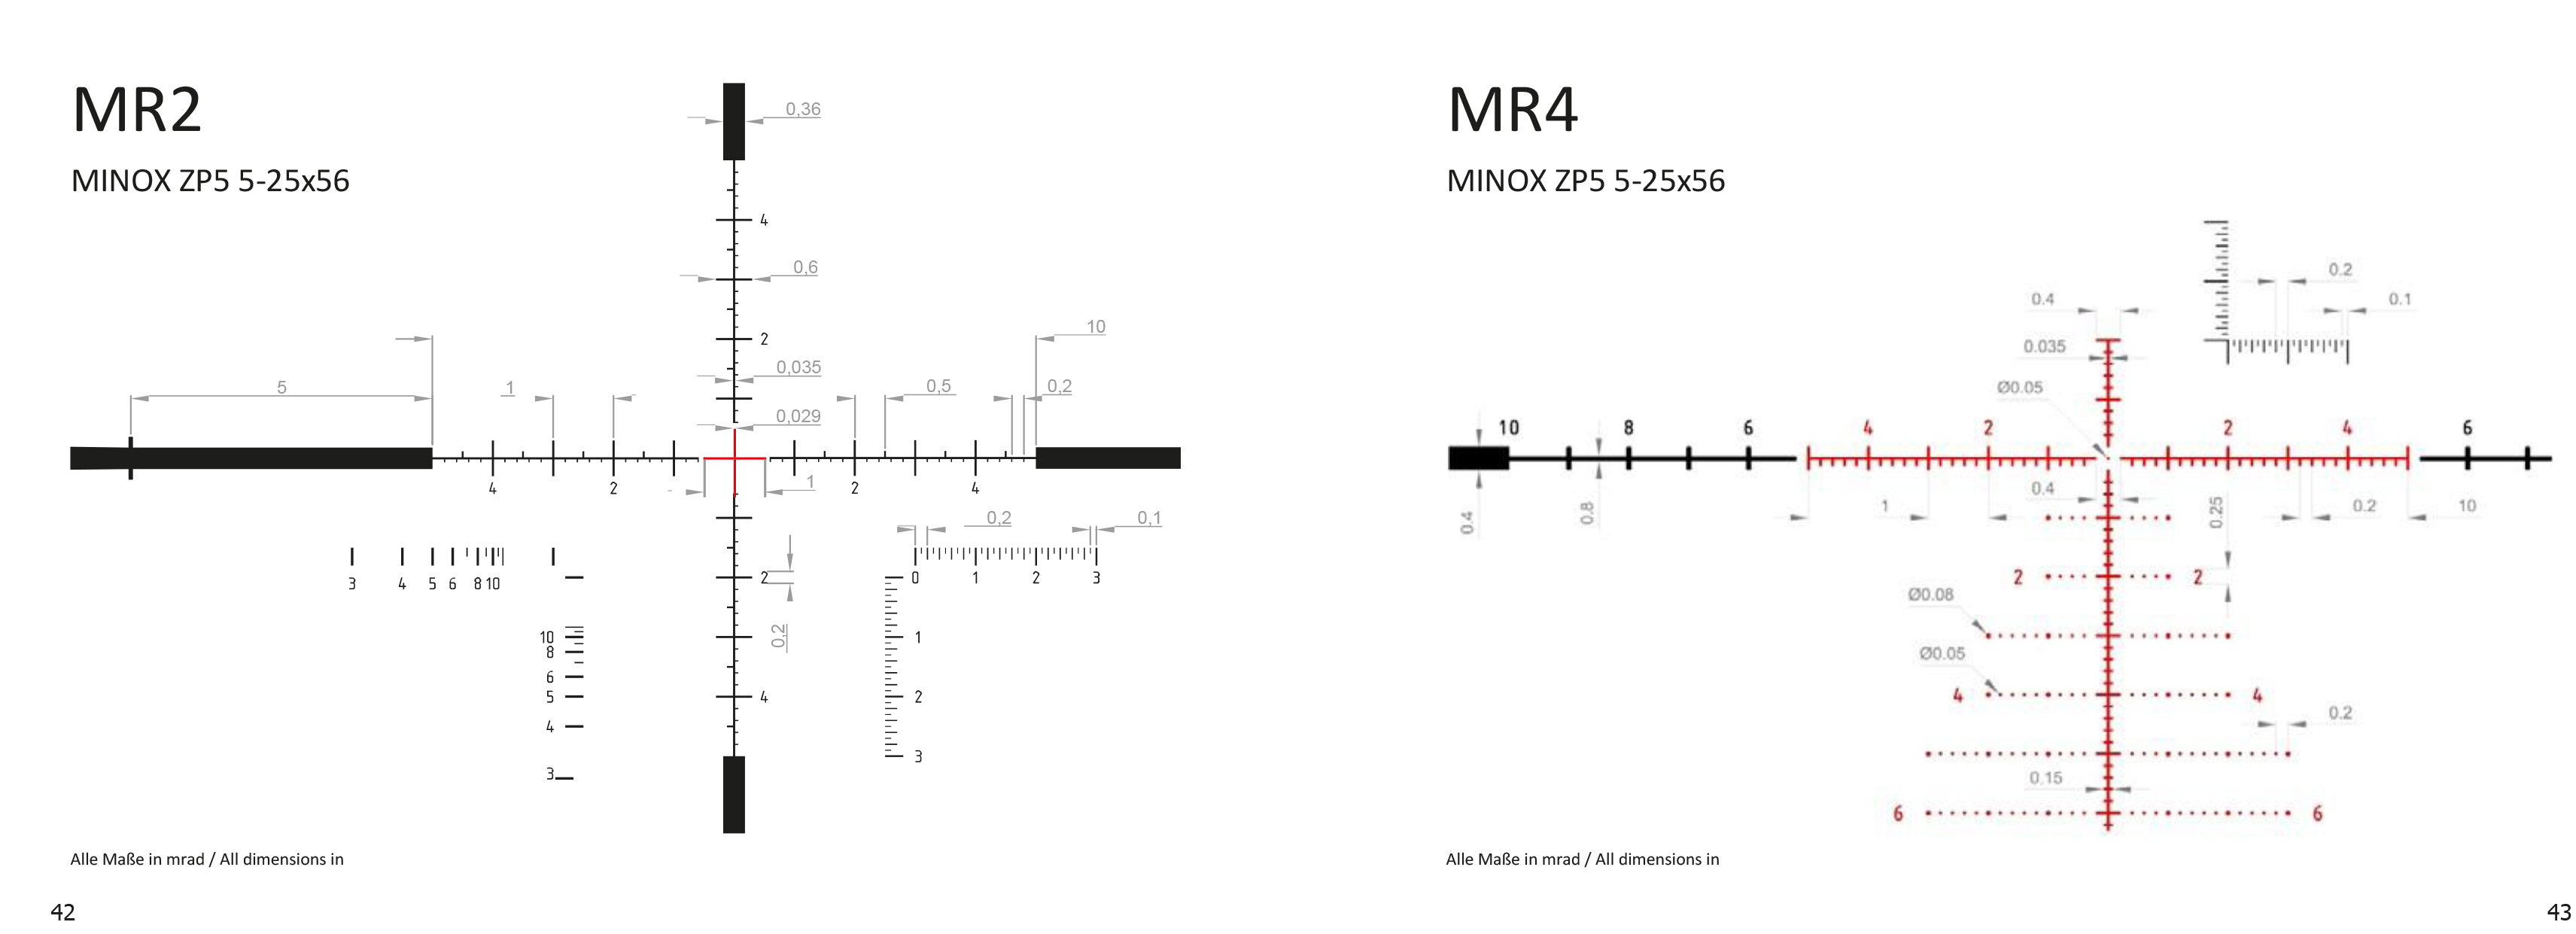 puskohlad-minox-zp5-5-25x56-mr5